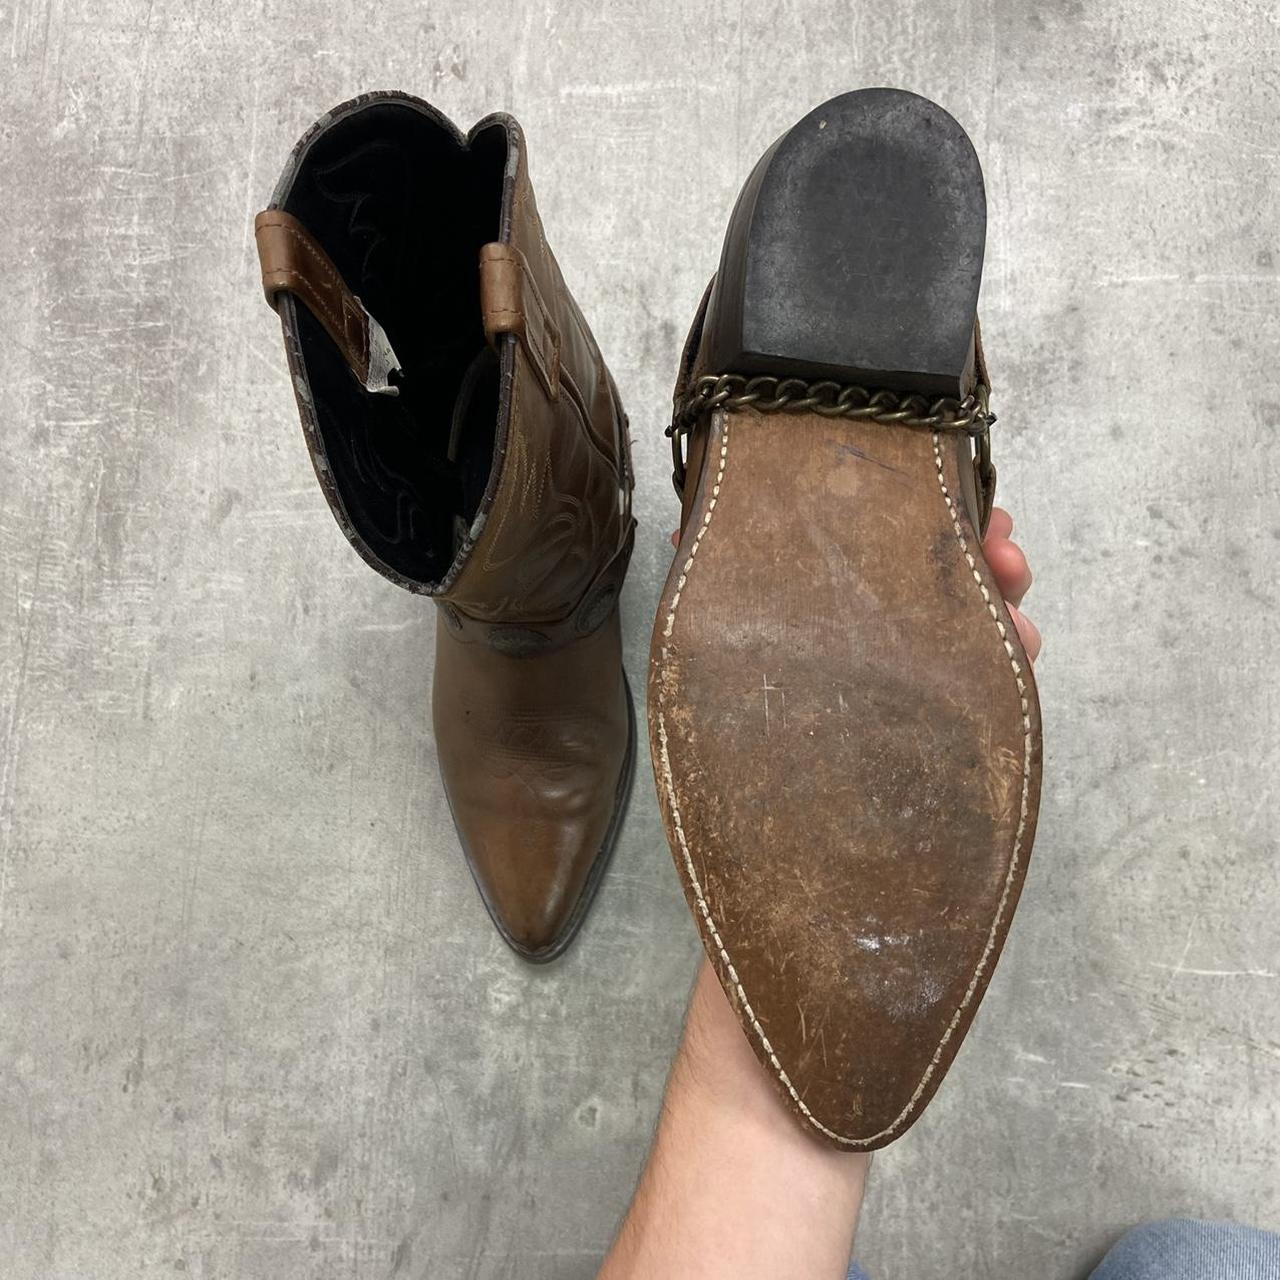 Vintage 90s Leather cowboy boots in brown 🌊 super... - Depop